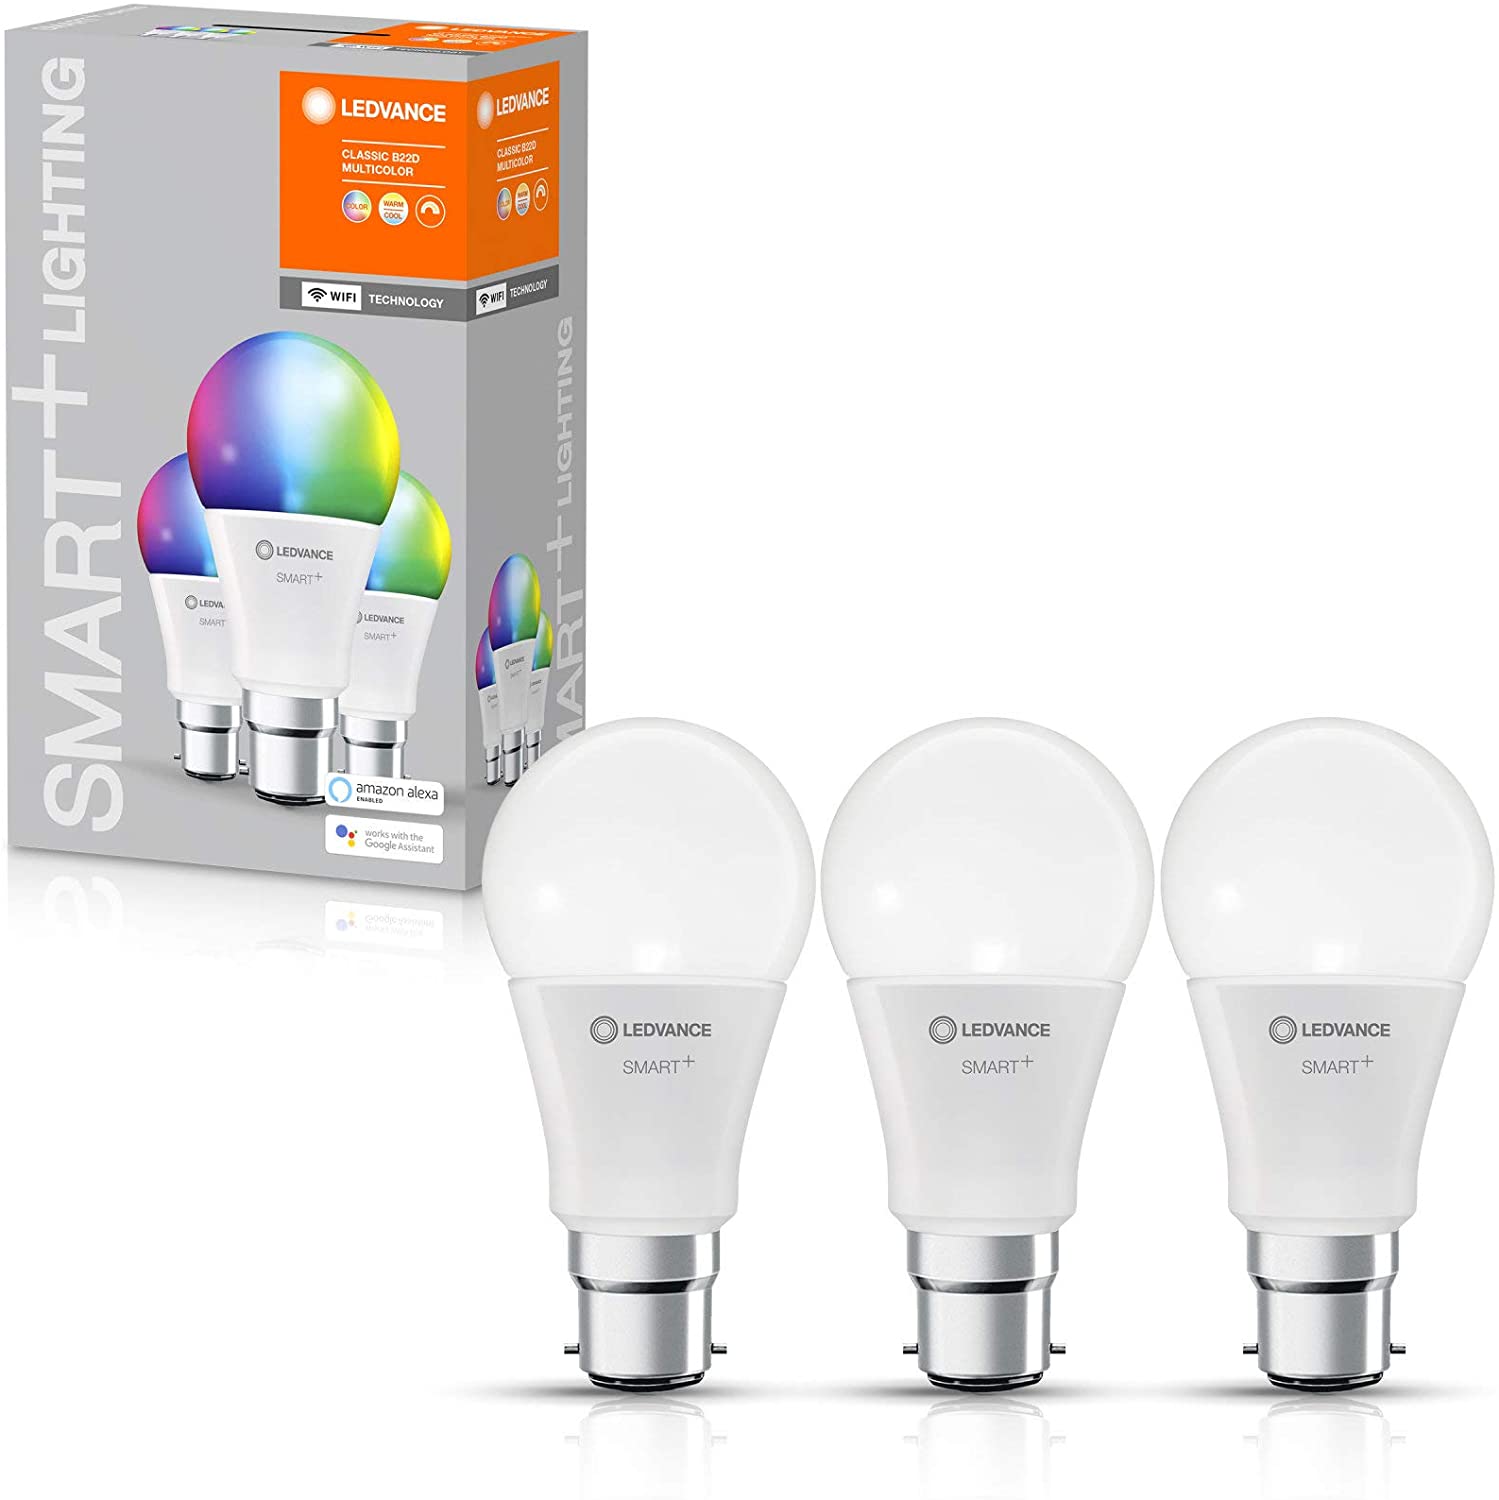 LEDVANCE Smart LED Lamp with Wi-Fi Technology - 3 Pack